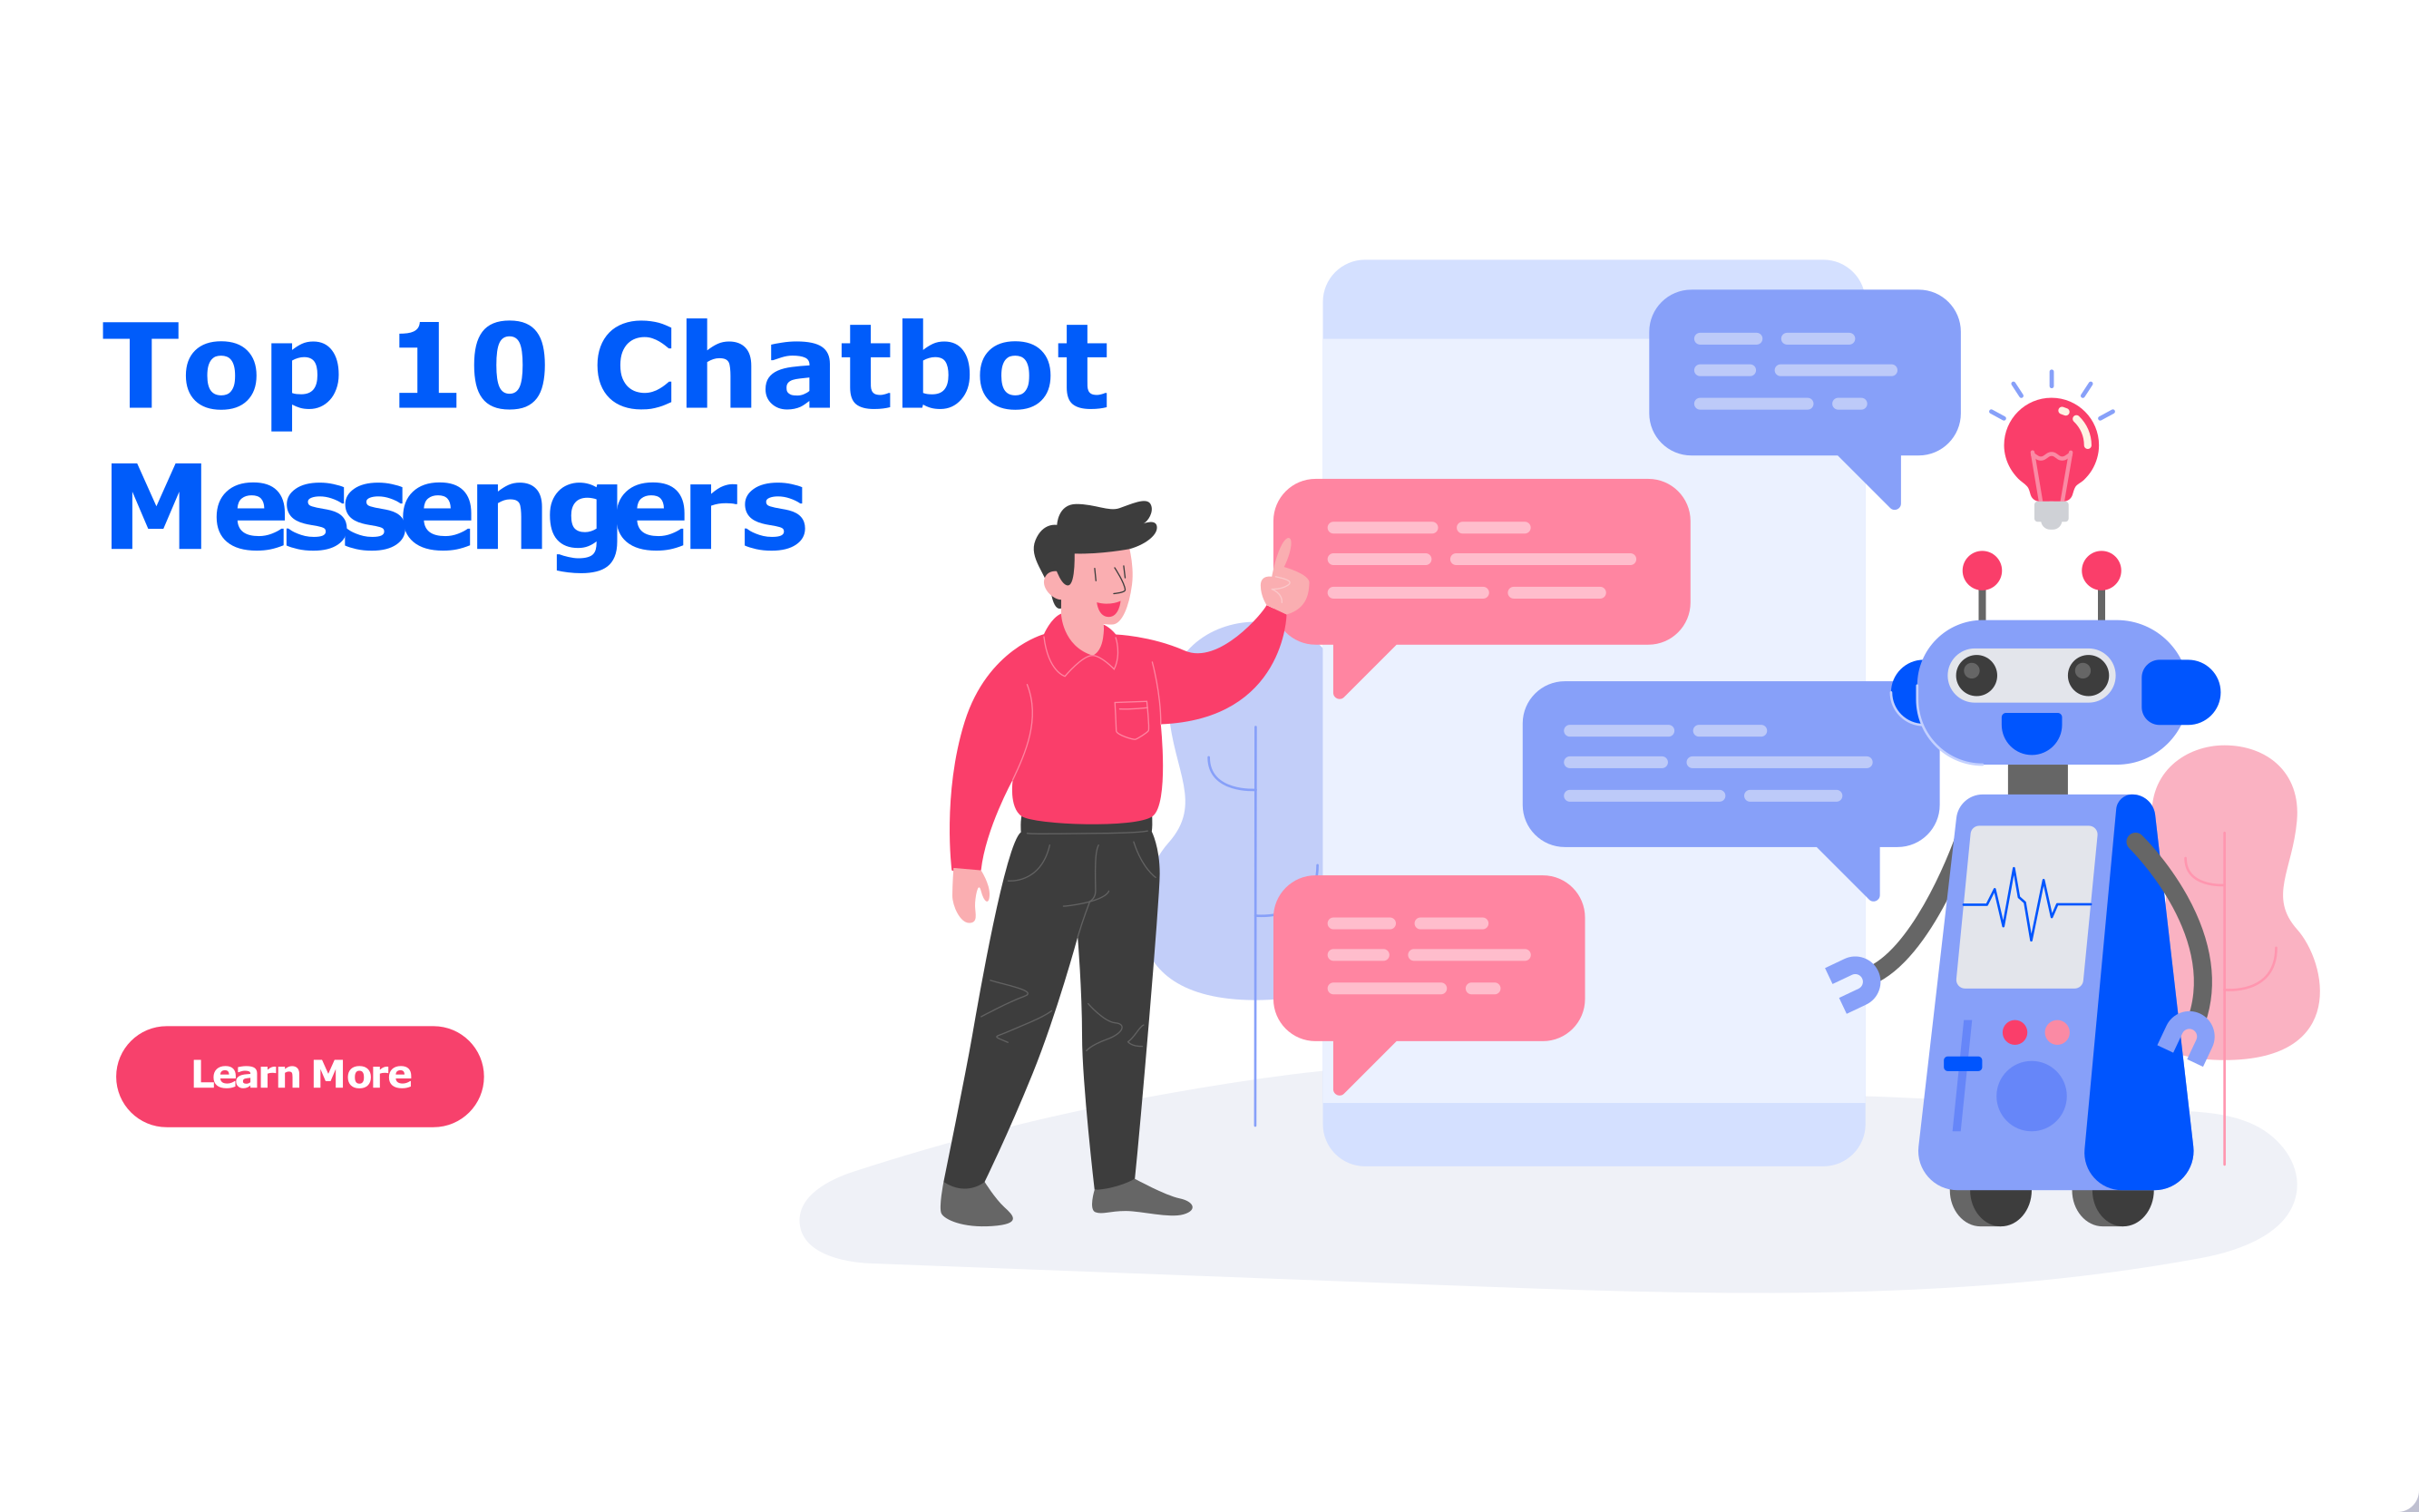 Top 10 Chatbot